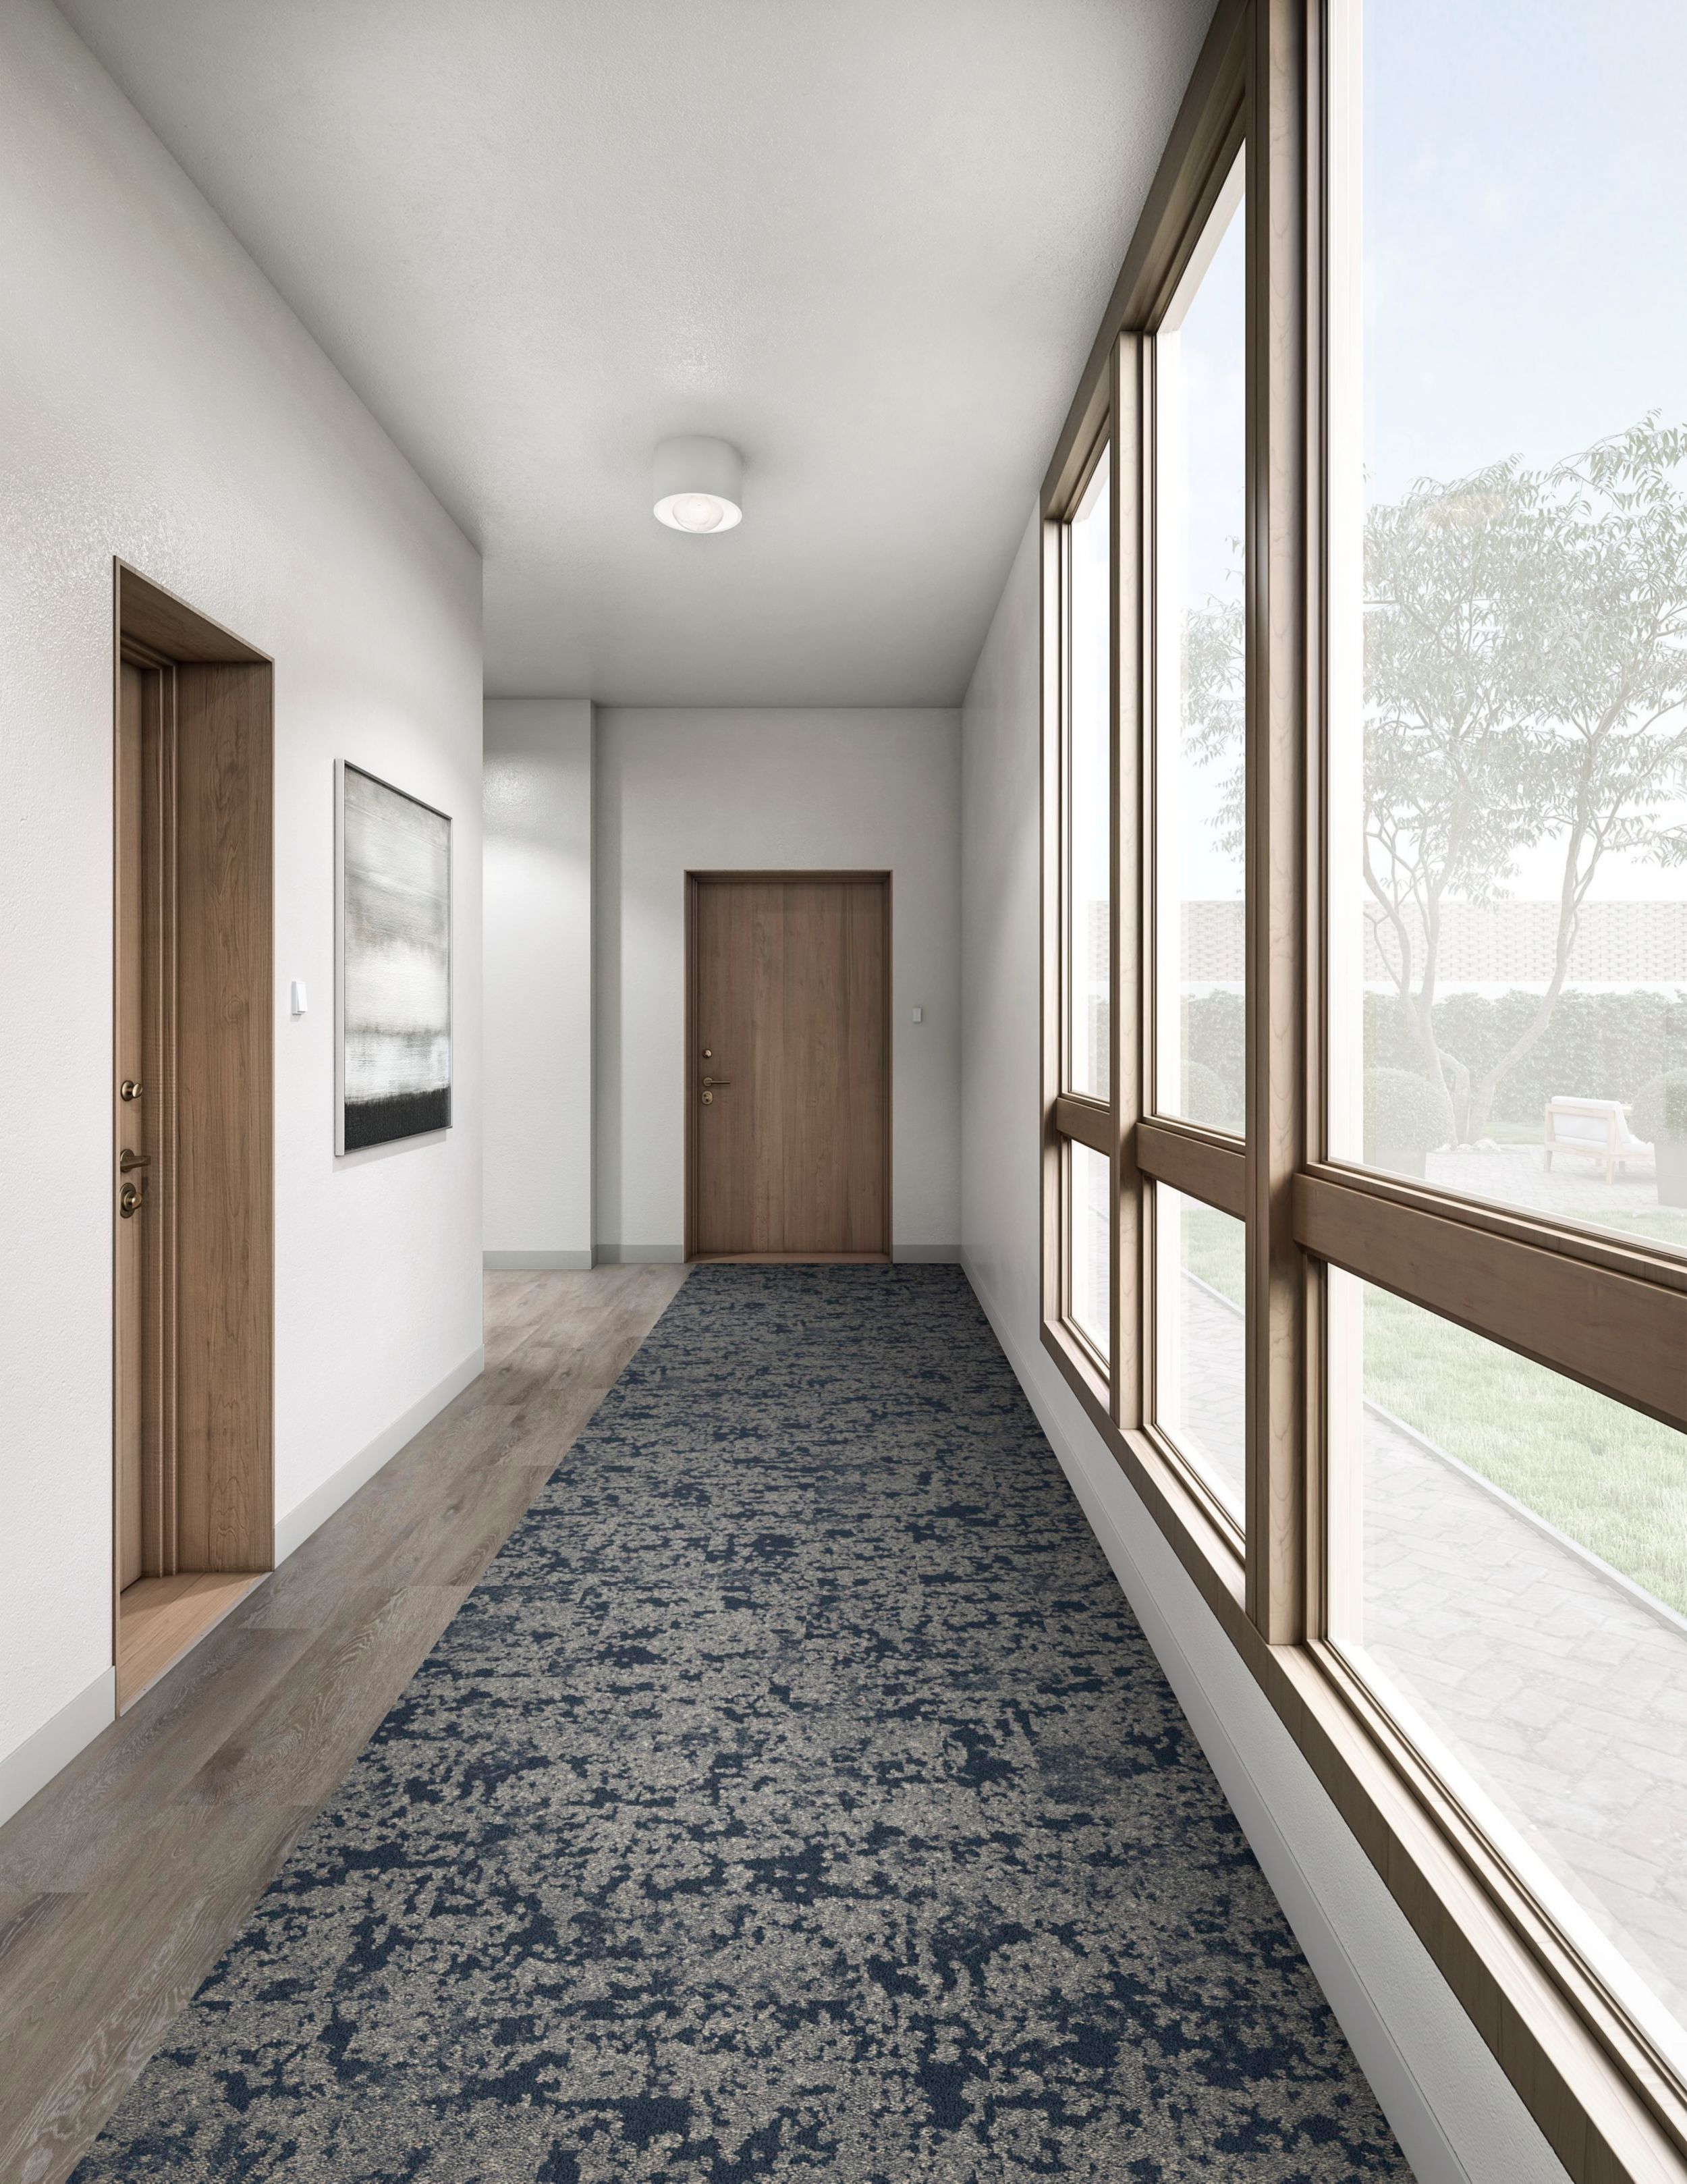 Interface Meadowland carpet tile in hallway with wooden door at end imagen número 3